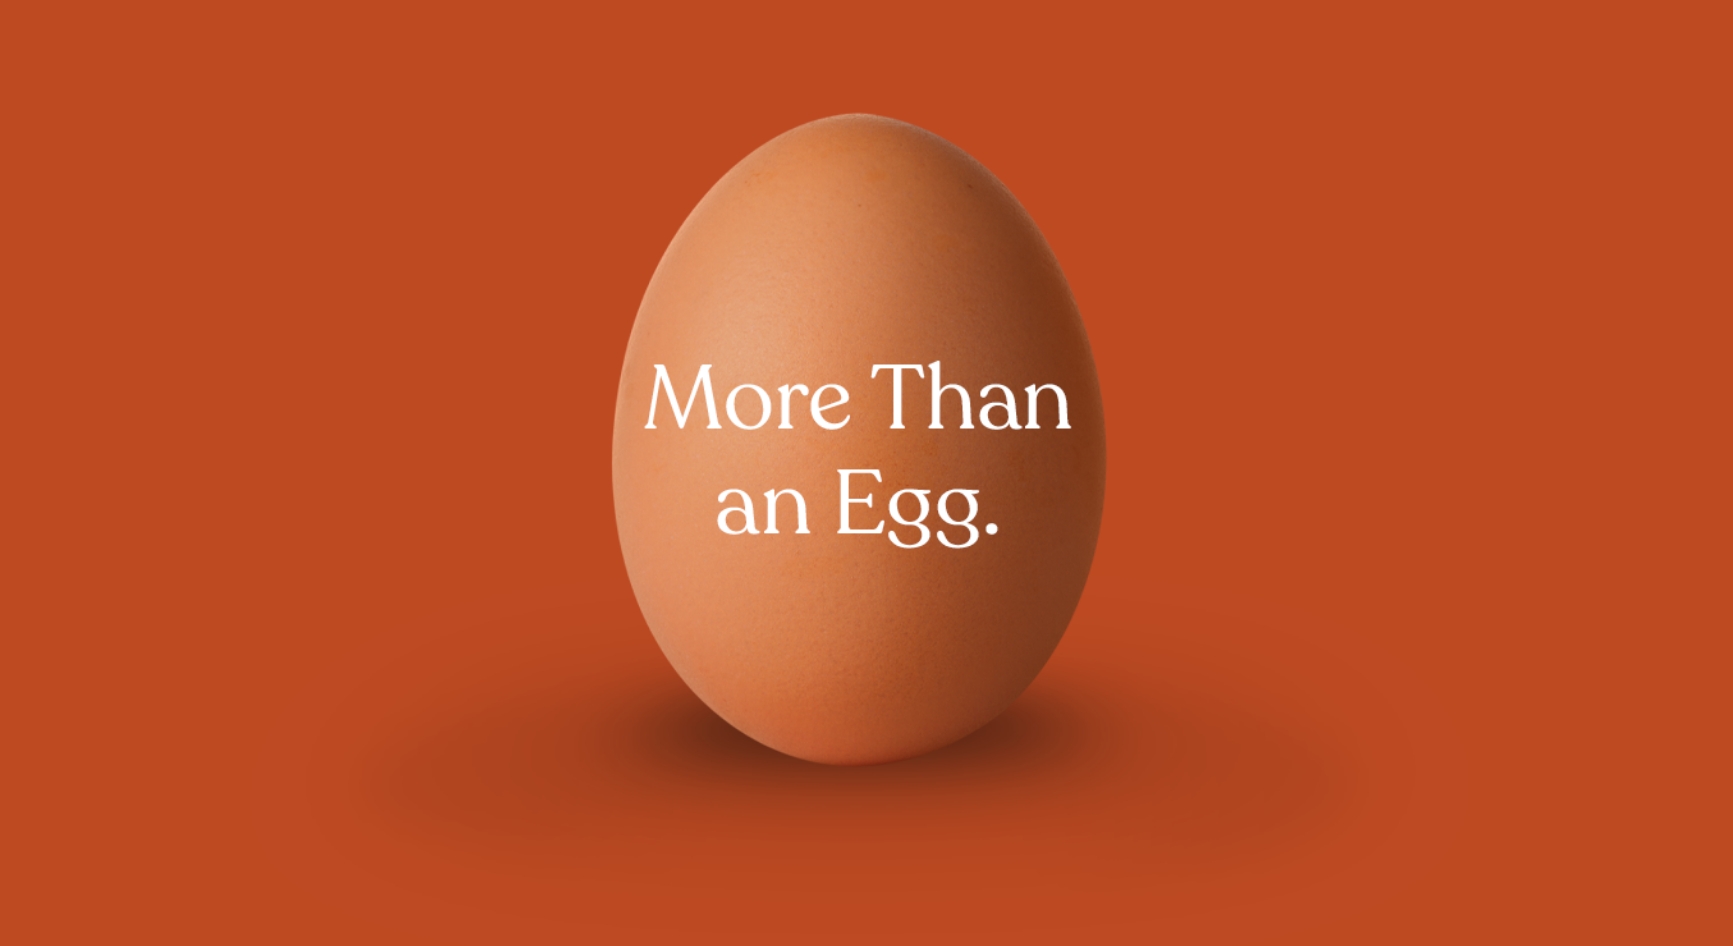 Farmers Hen House "More Than an Egg" tagline